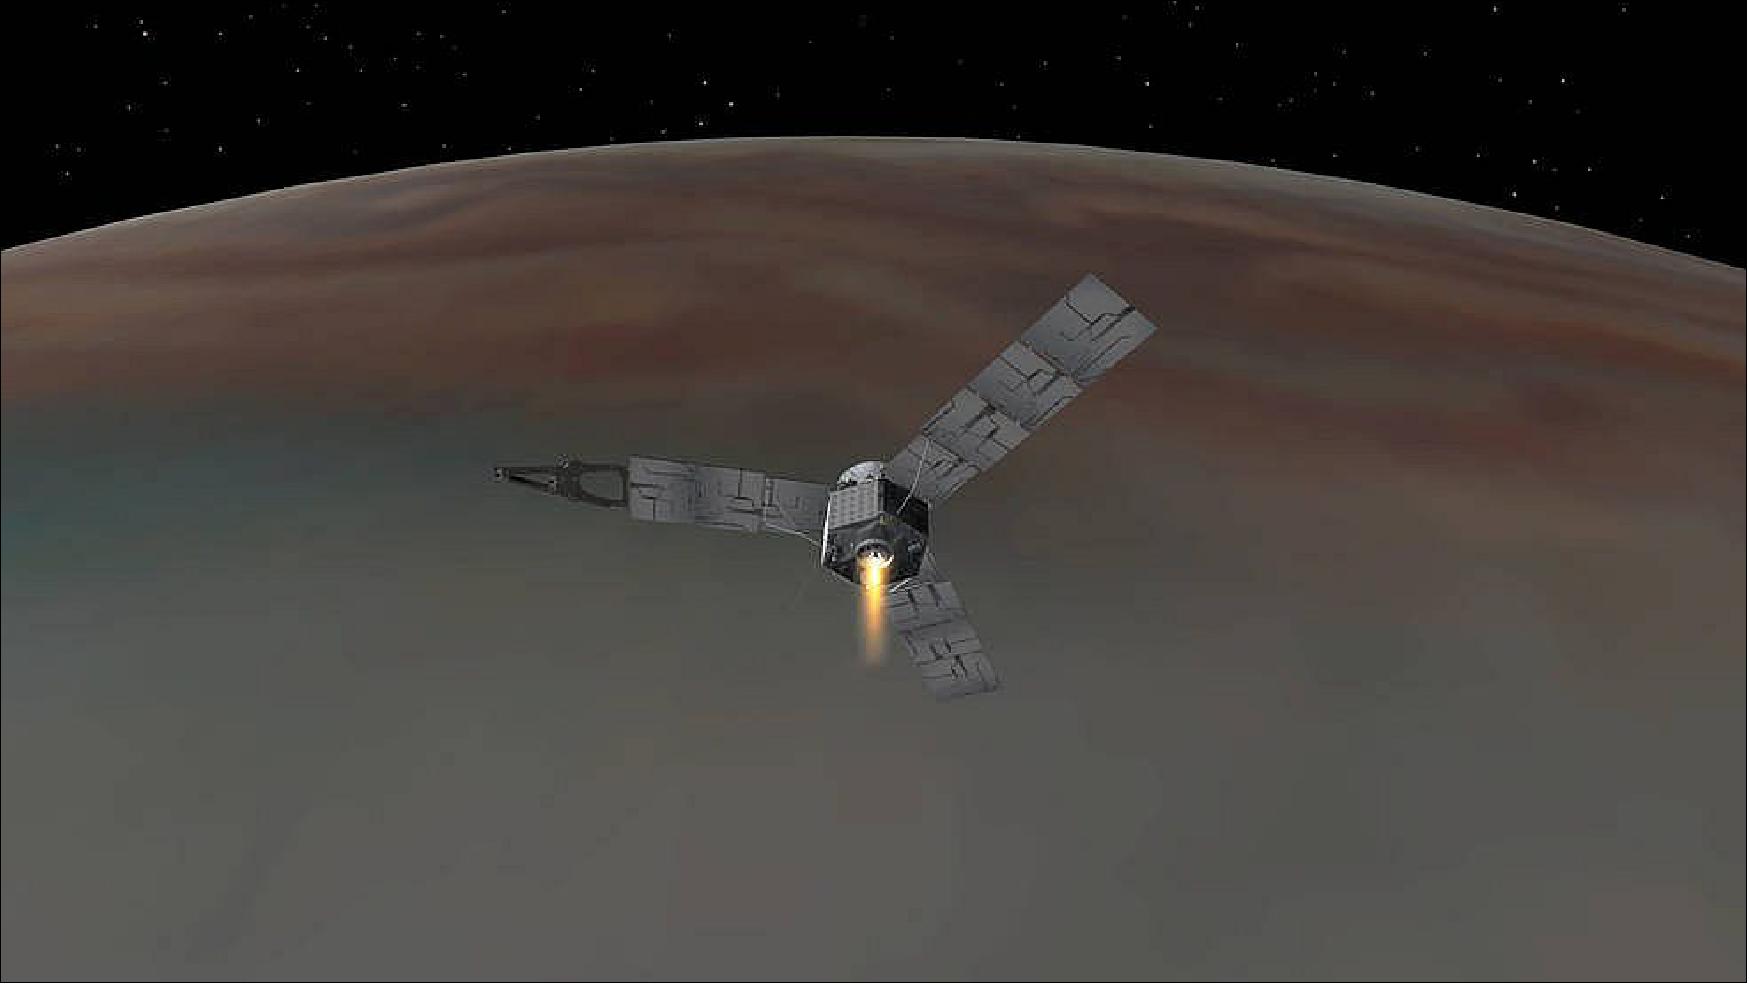 Figure 50: This illustration depicts NASA's Juno spacecraft successfully entering Jupiter's orbit (image credit: NASA/JPL-Caltech)